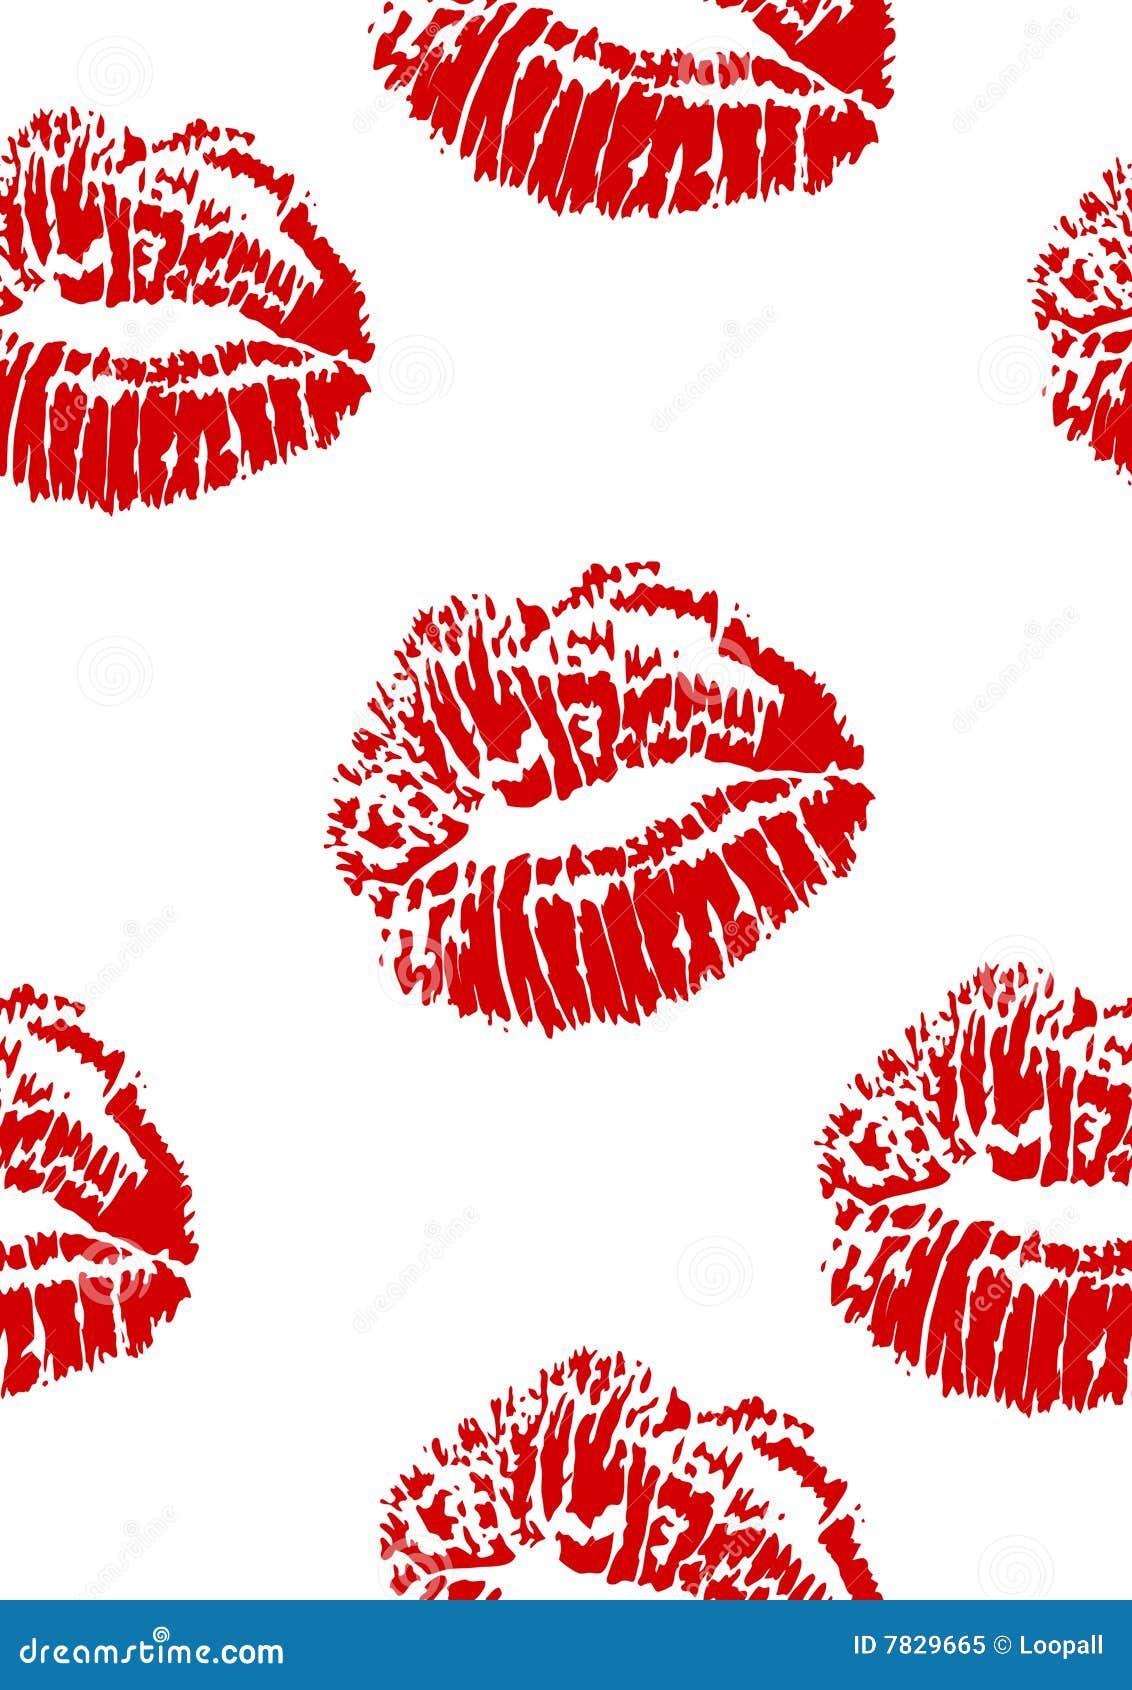 clipart red lipstick kiss - photo #28